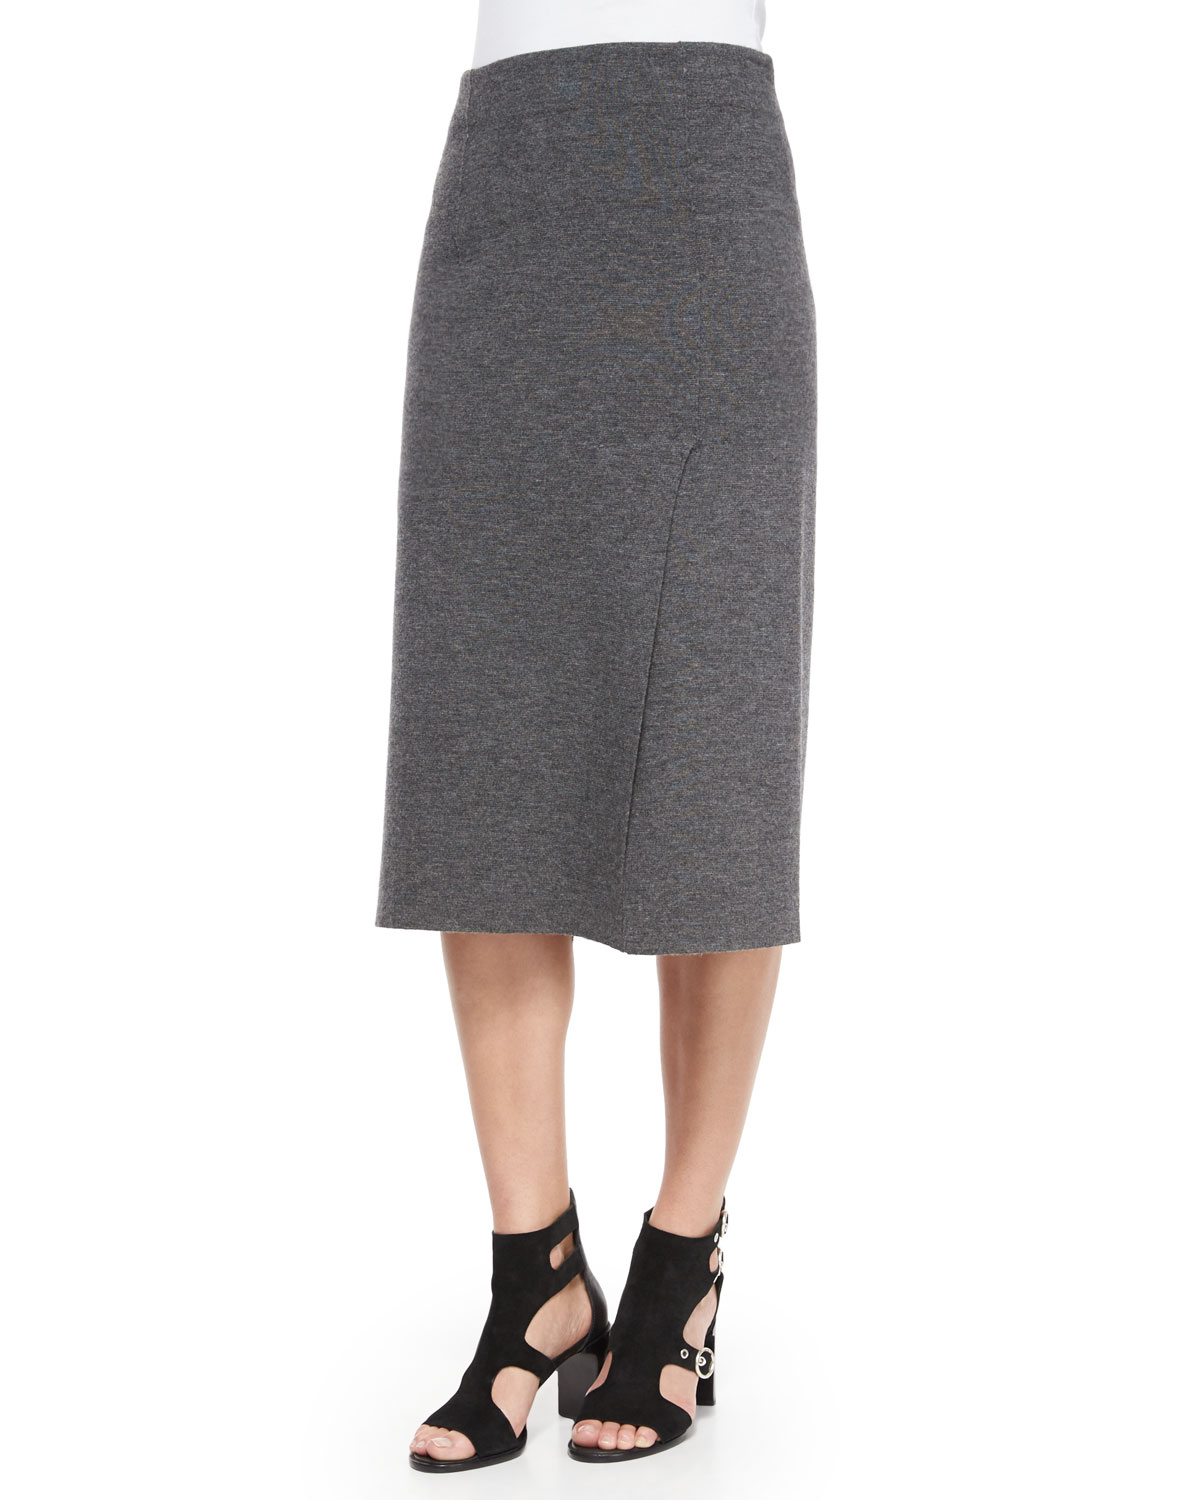 Rag & bone Alanna Merino Wool Skirt in Gray - Save 66% | Lyst